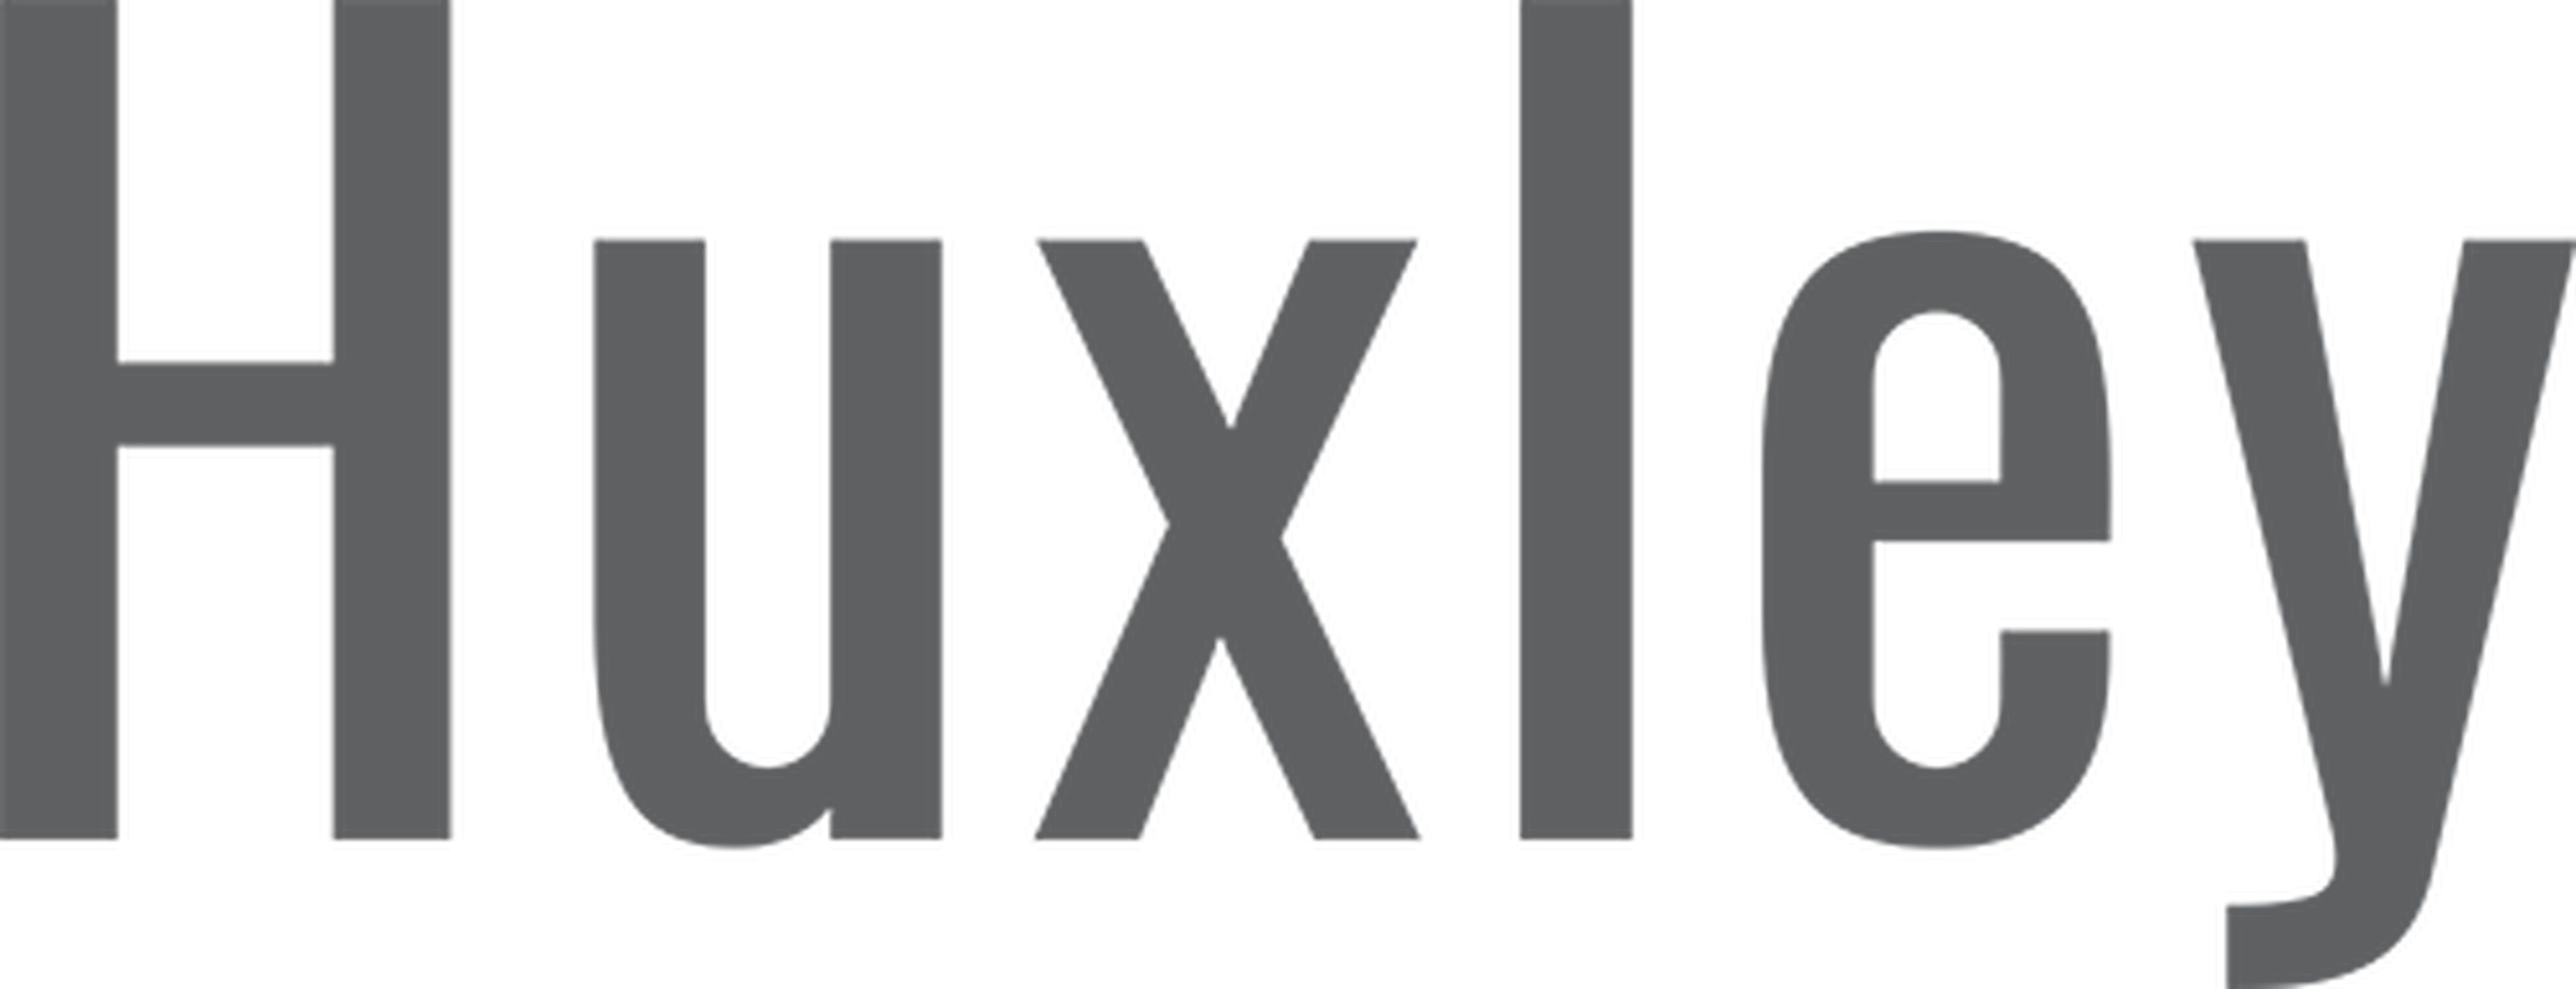 Huxley logotype